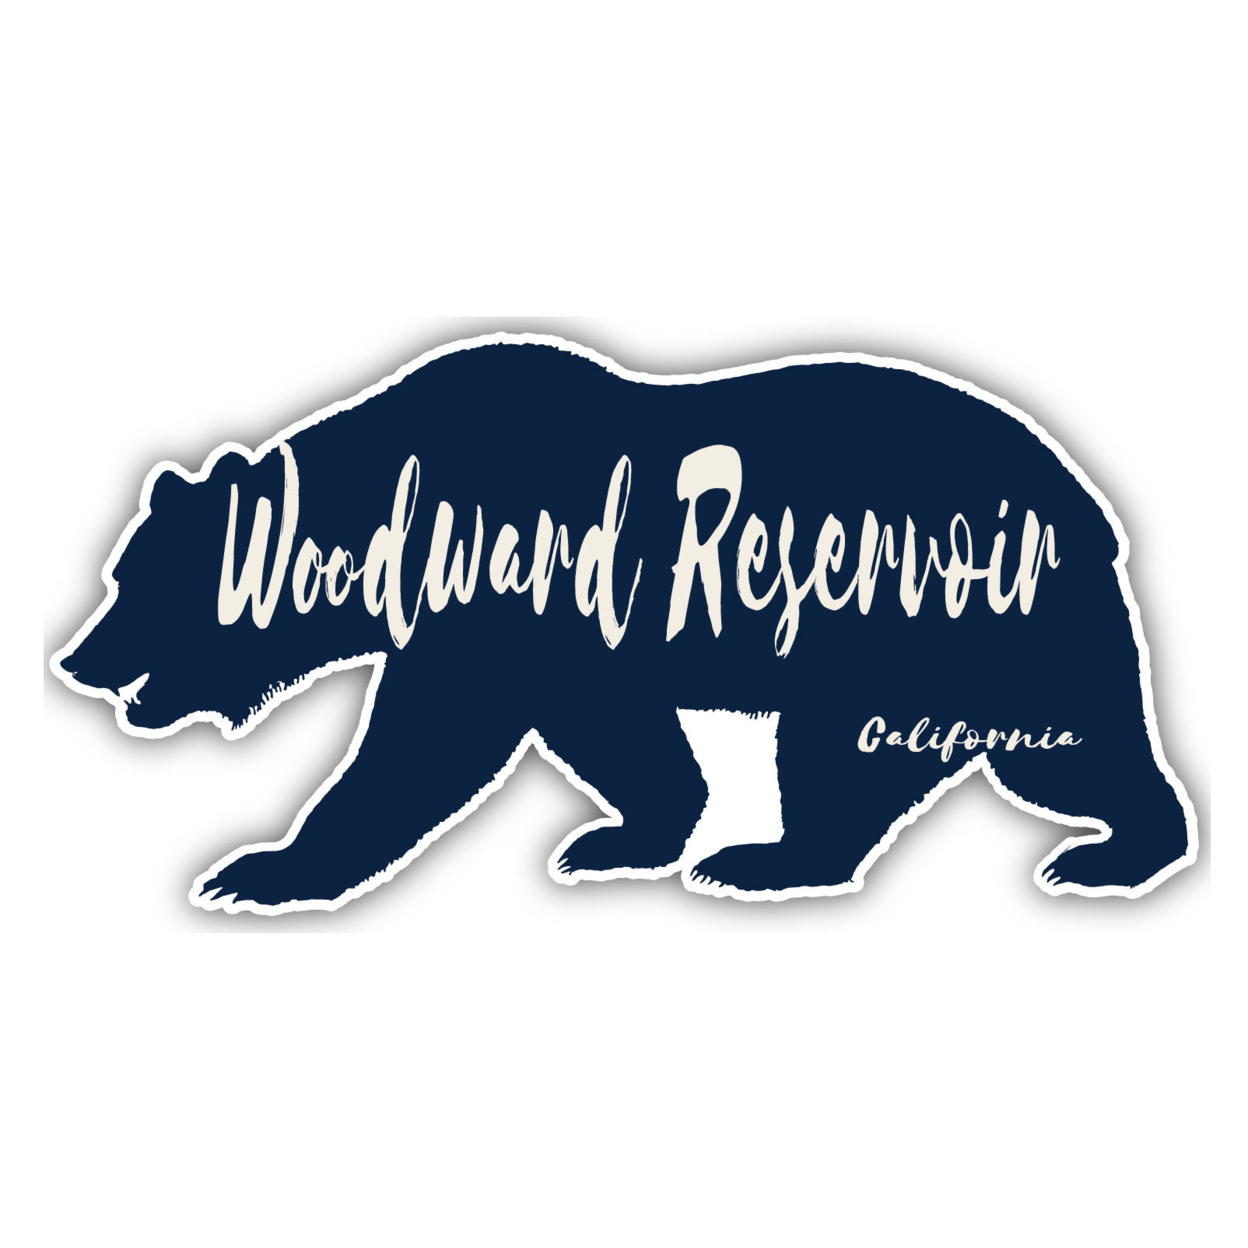 Woodward Reservoir California Souvenir Decorative Stickers (Choose Theme And Size) - Single Unit, 2-Inch, Bear